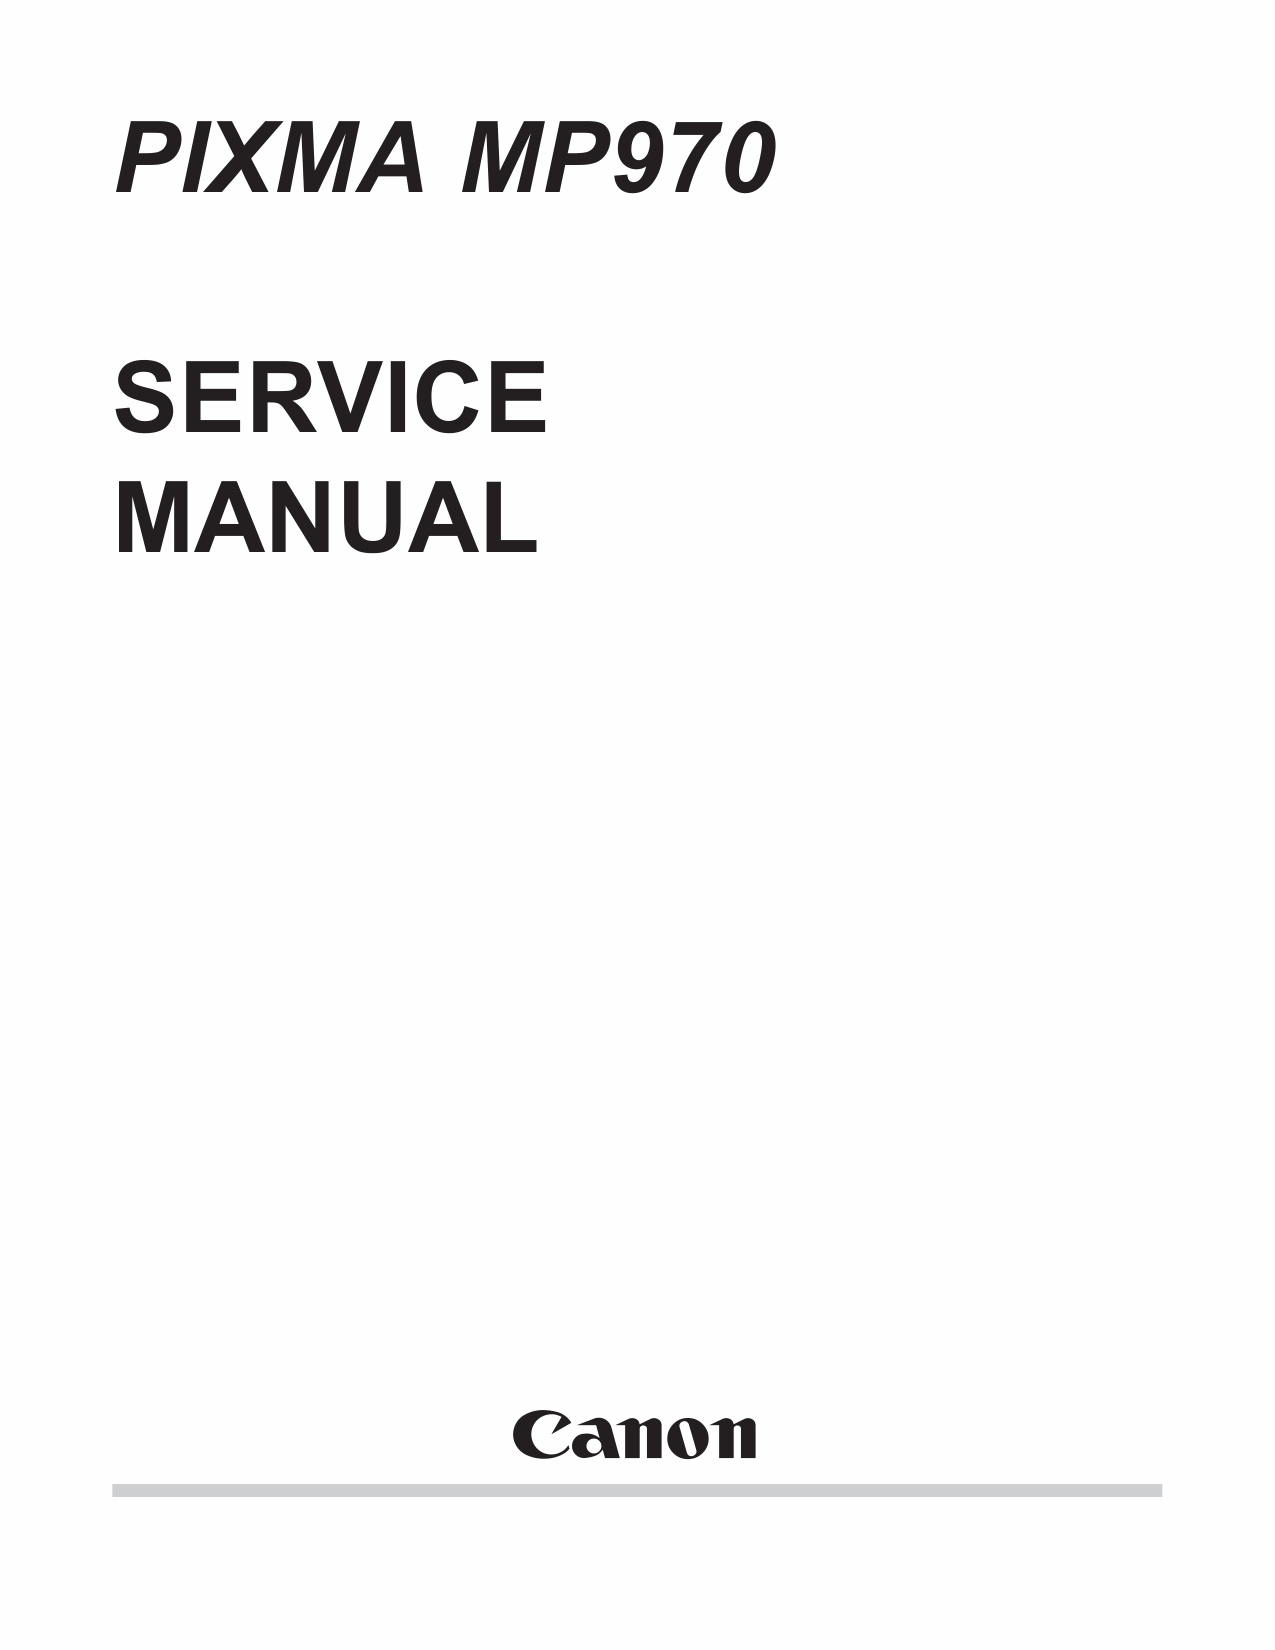 Canon PIXMA MP970 Parts and Service Manual-1